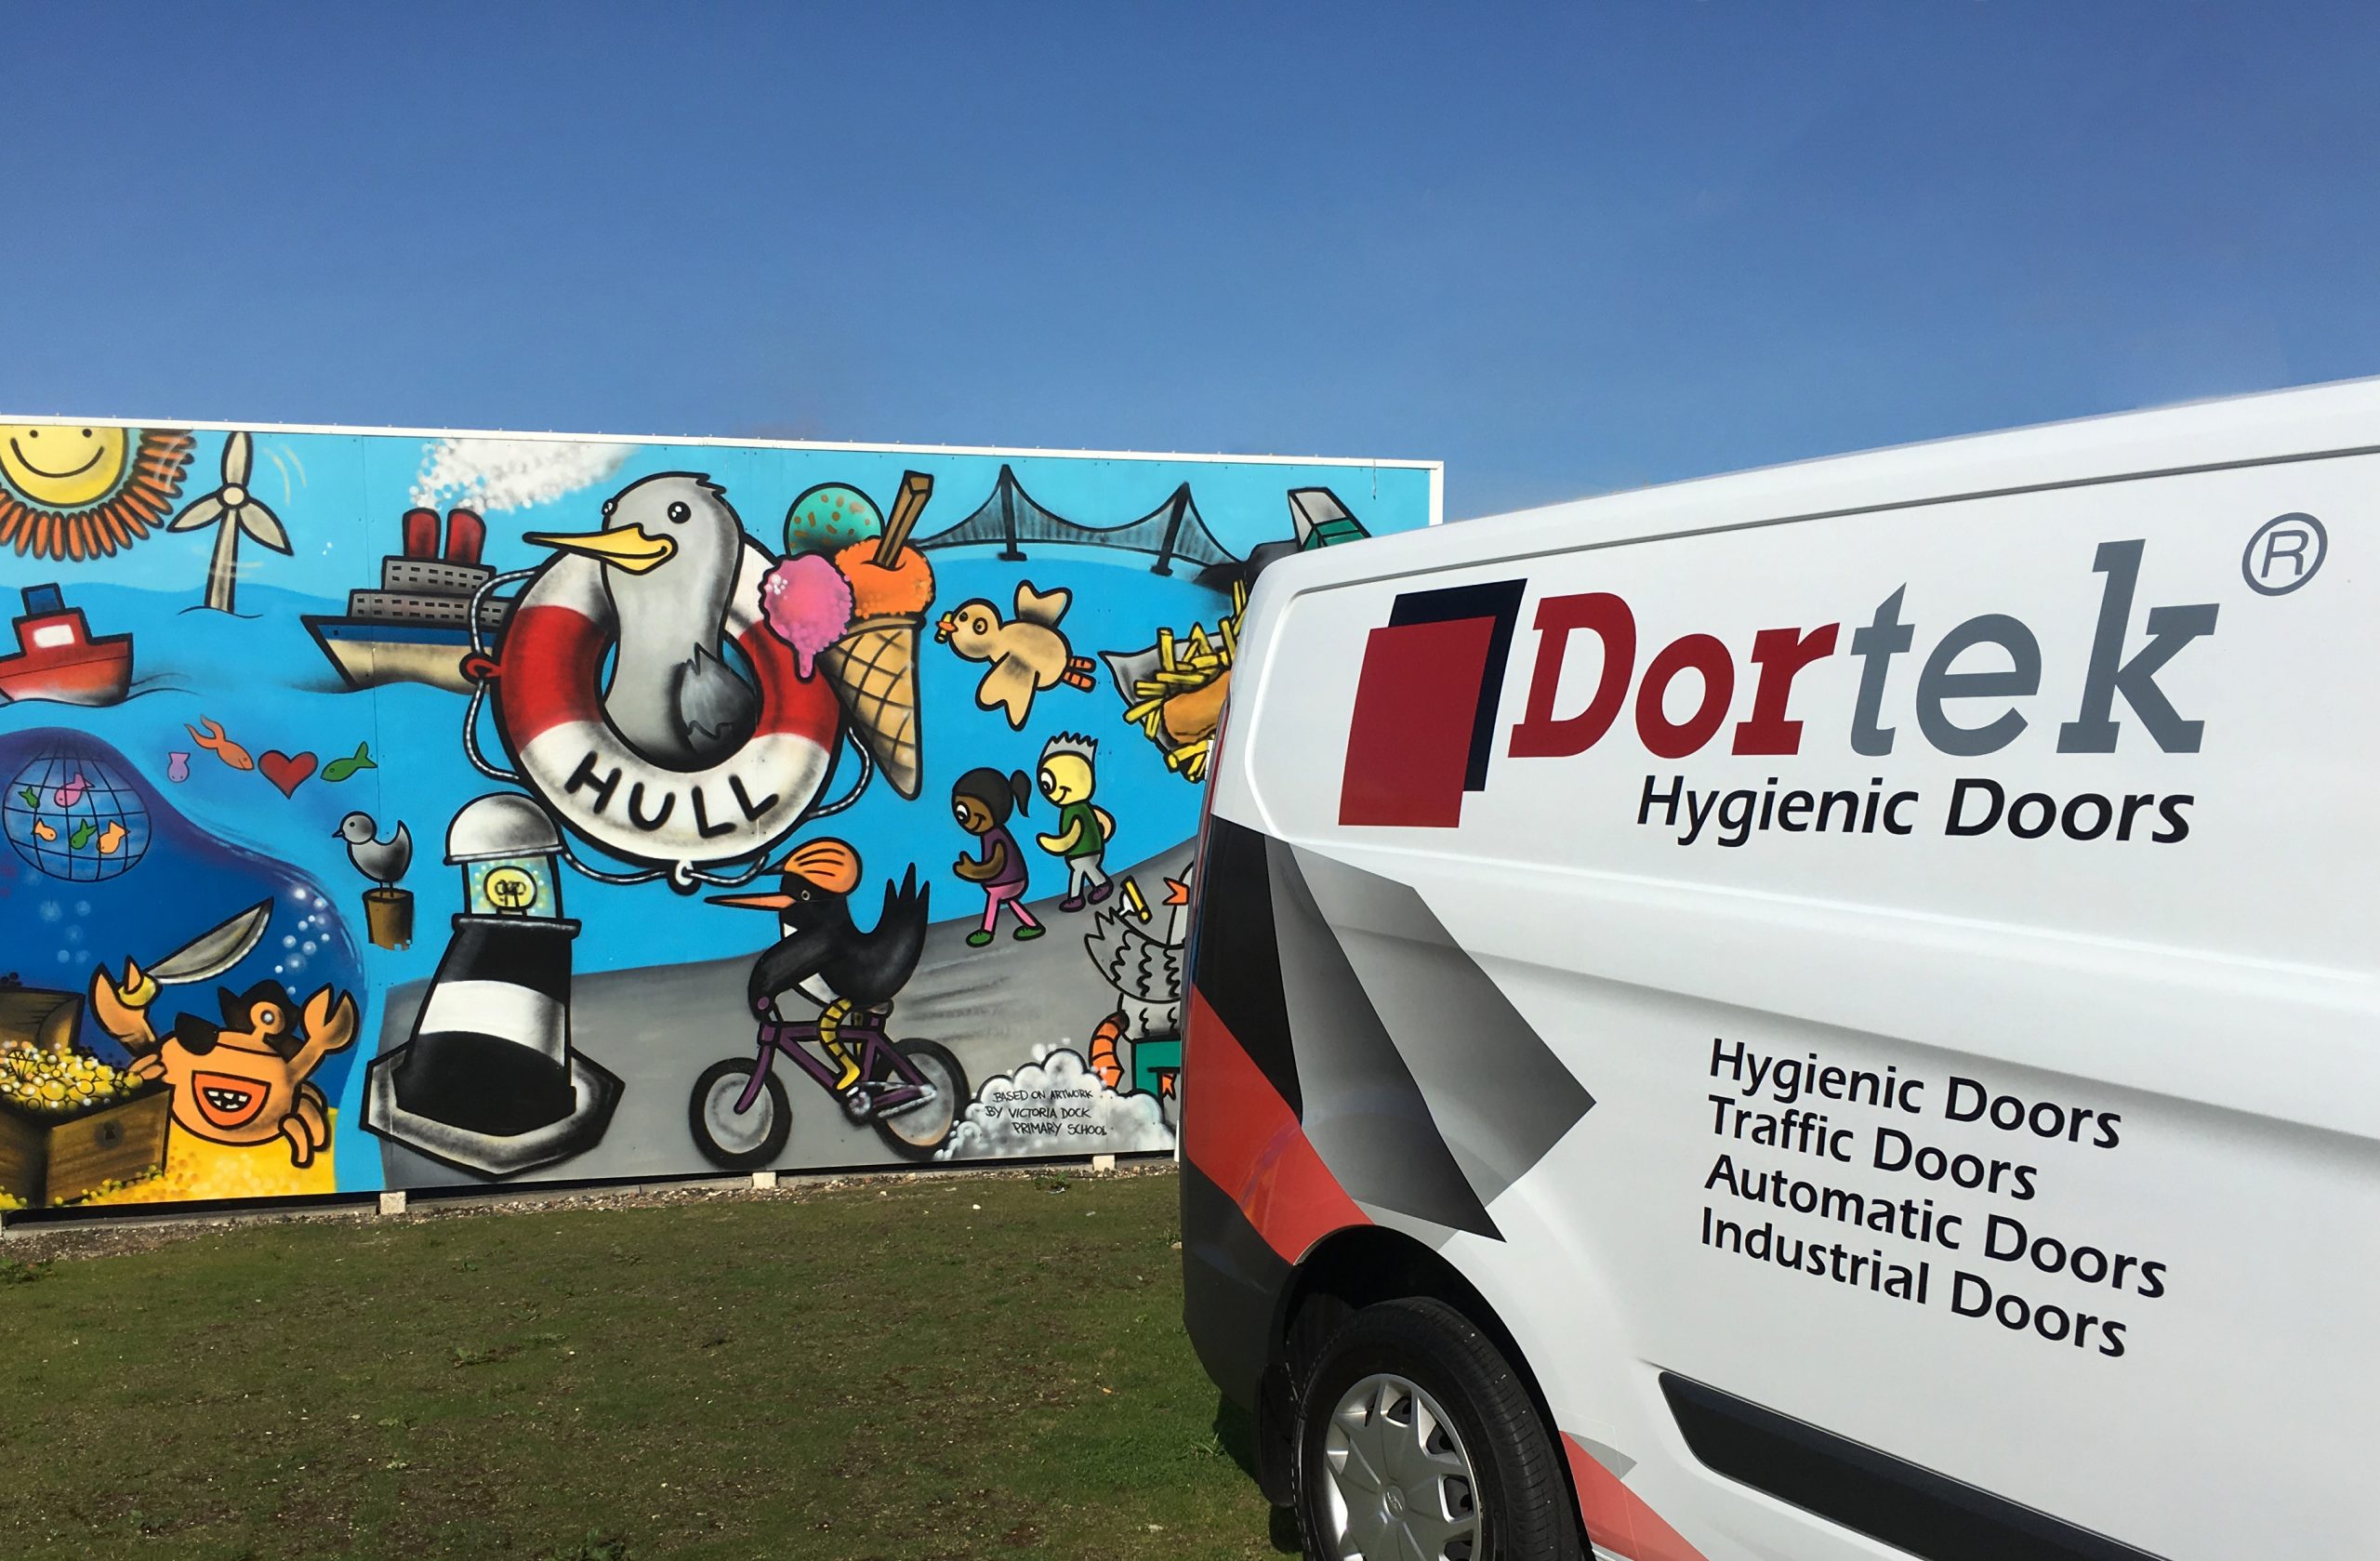 Dortek Hull Celebrates its 30th Anniversary